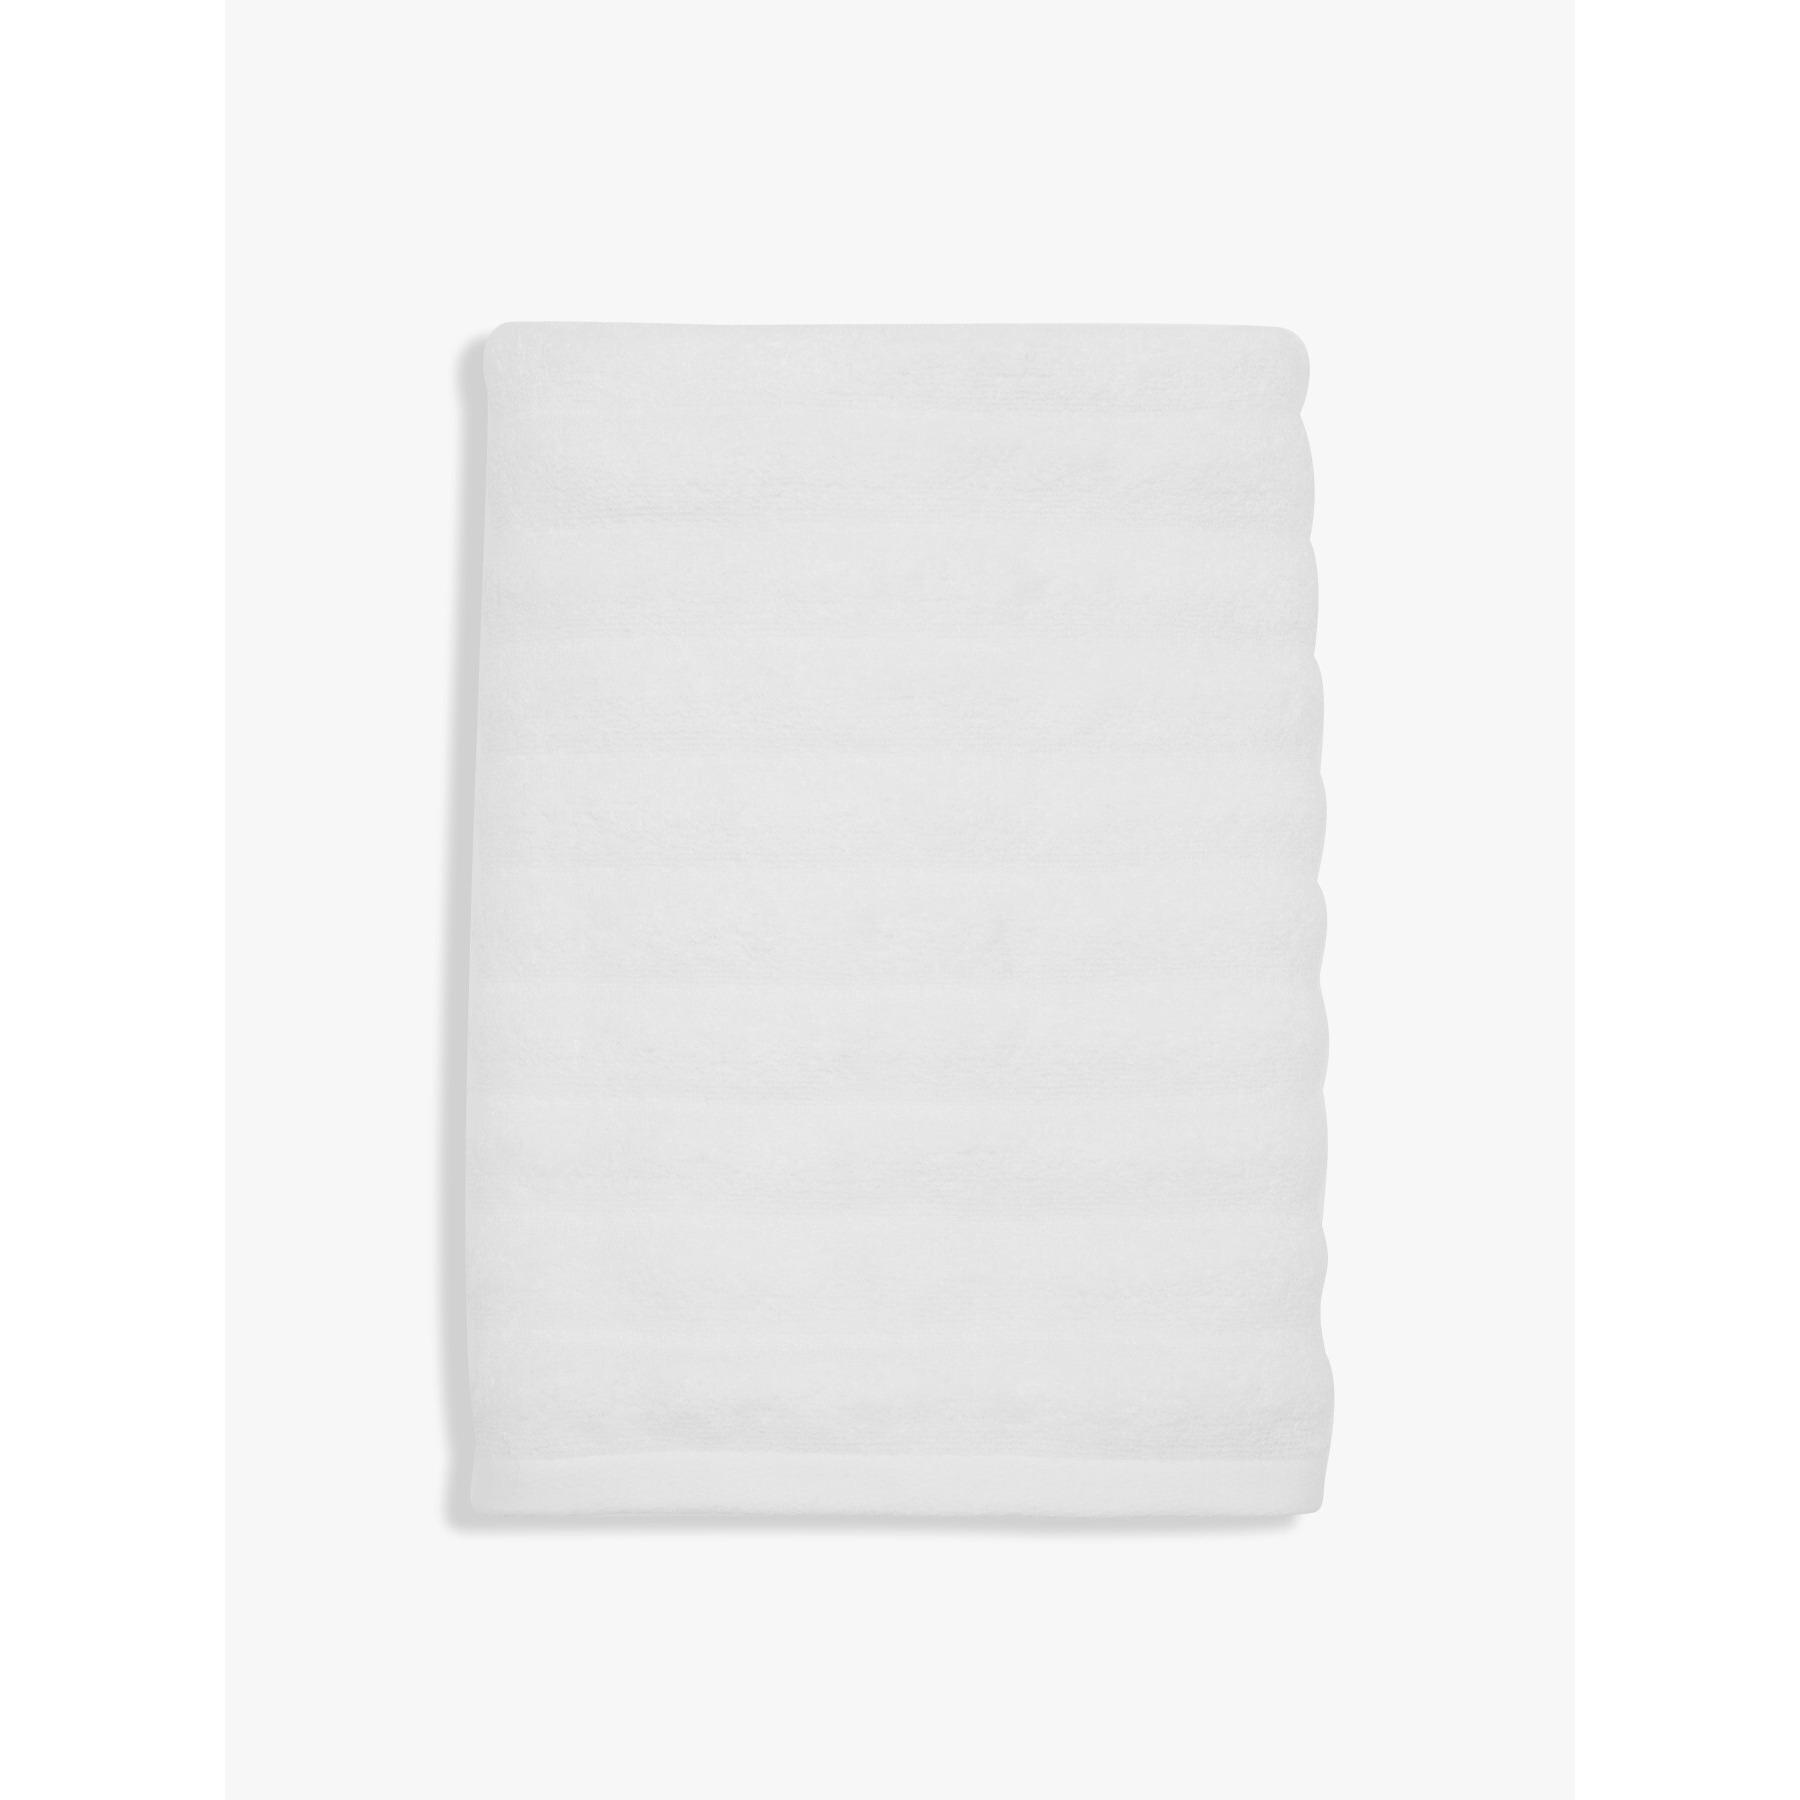 Fenwick at Home Regent Rib Hand Towel White - image 1